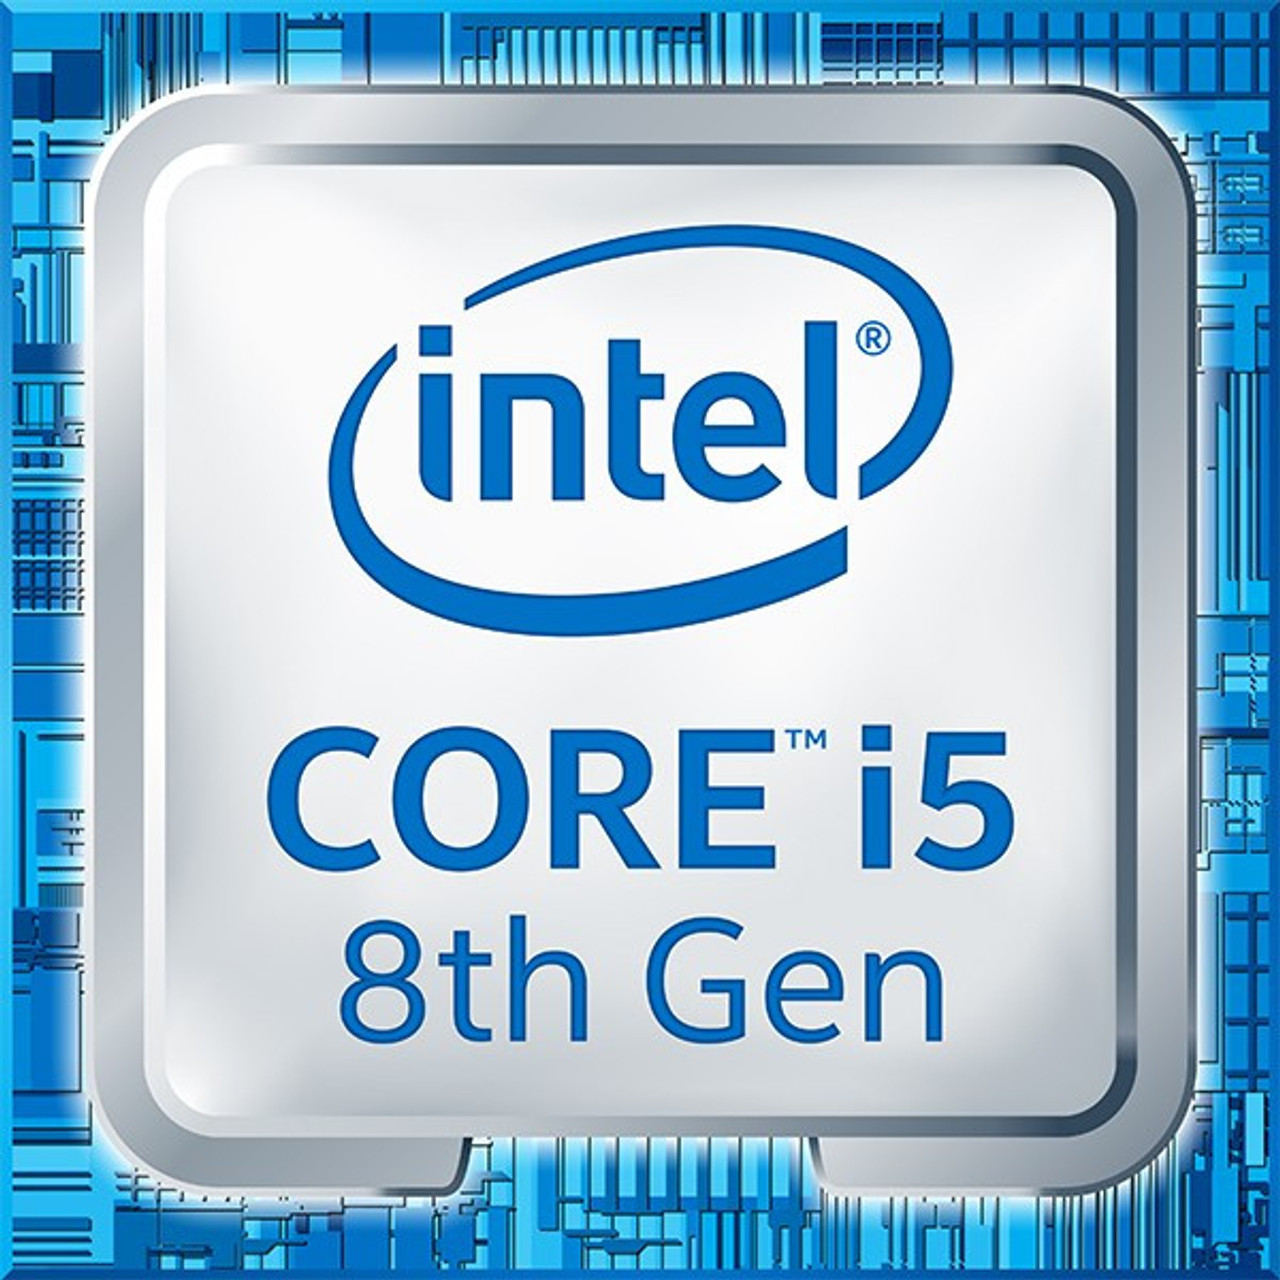 Intel Core Â® â„¢ i5-8600K Processor (9M Cache, up to 4.30 GHz) 3.60GHz 9MB Smart Cache process